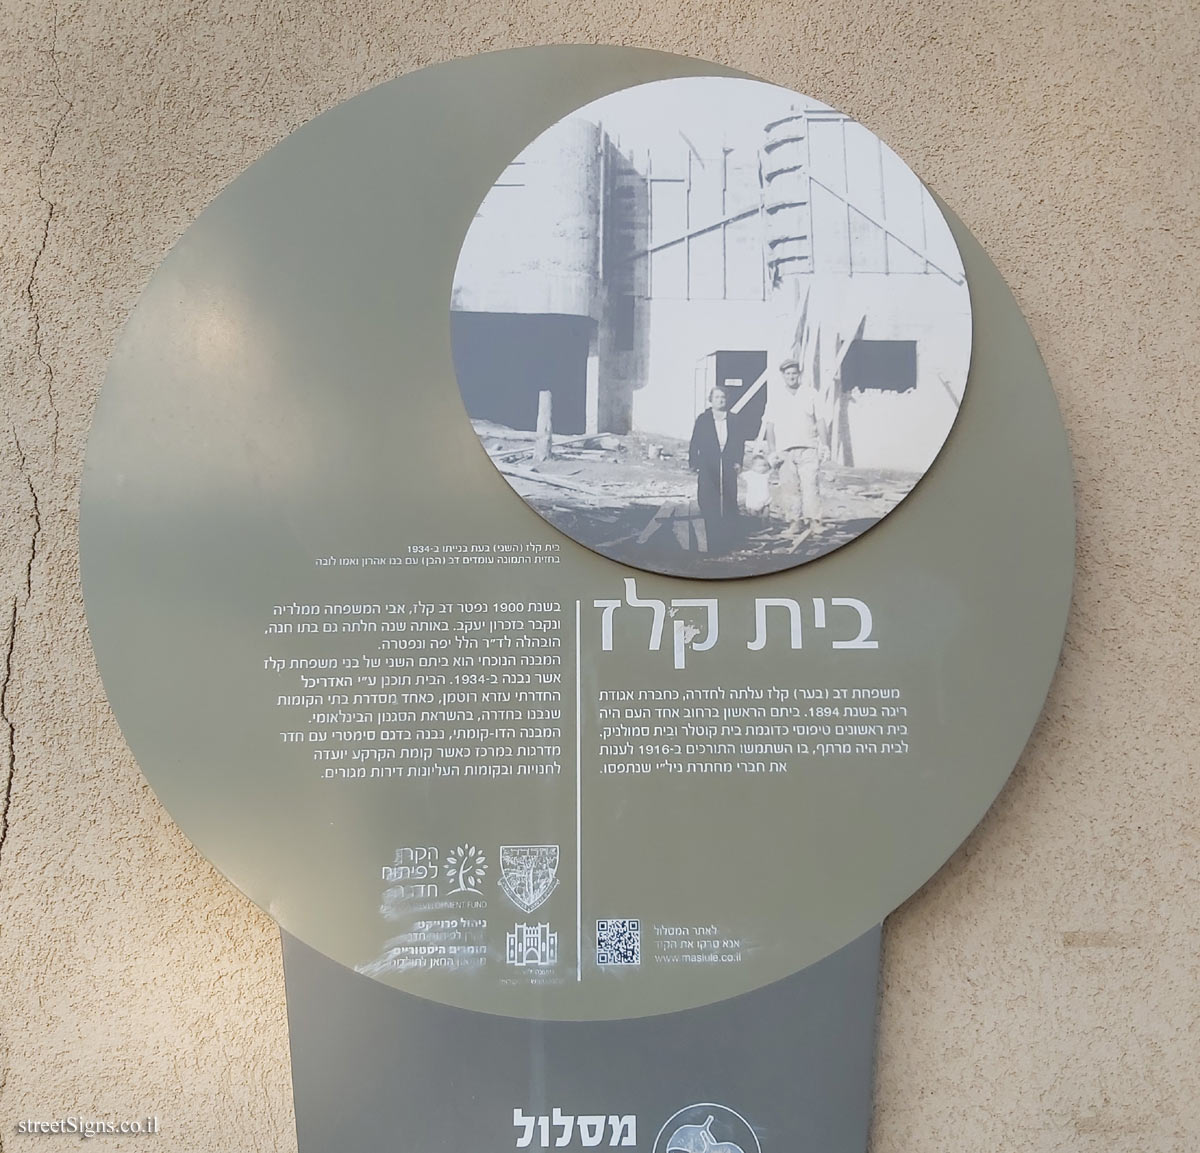 Hadera - The eucalyptus track - Beit Kelez - Herzl St 17, Hadera, Israel